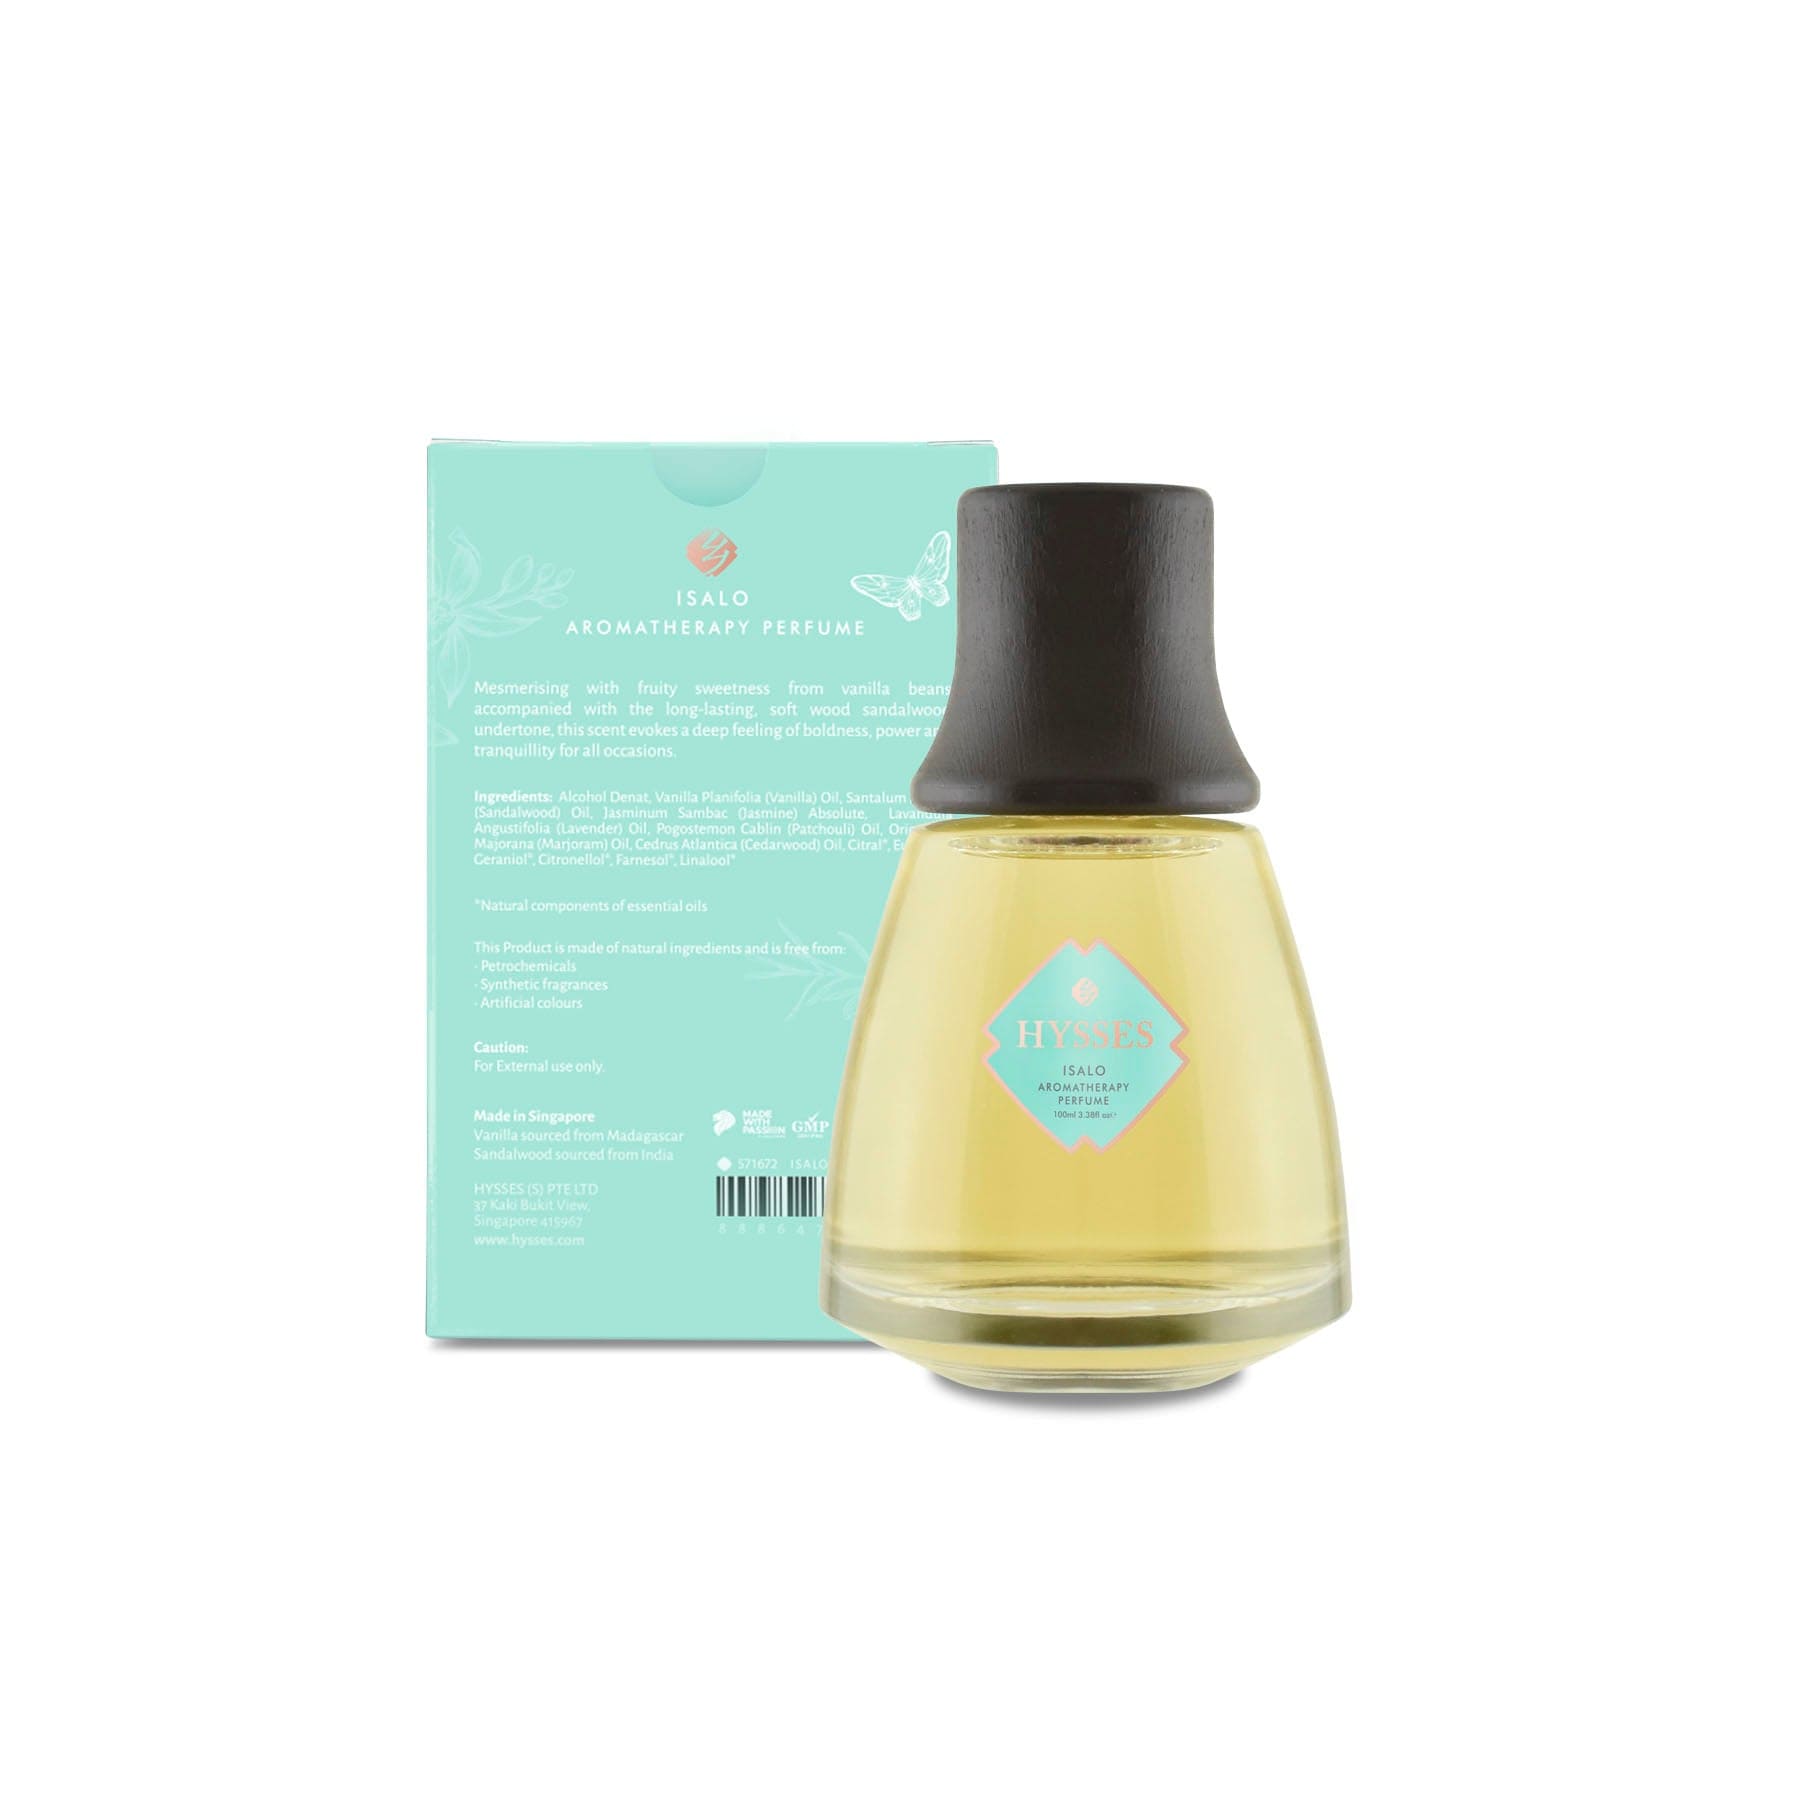 HYSSES Perfume Aromatherapy Perfume, Isalo VS151